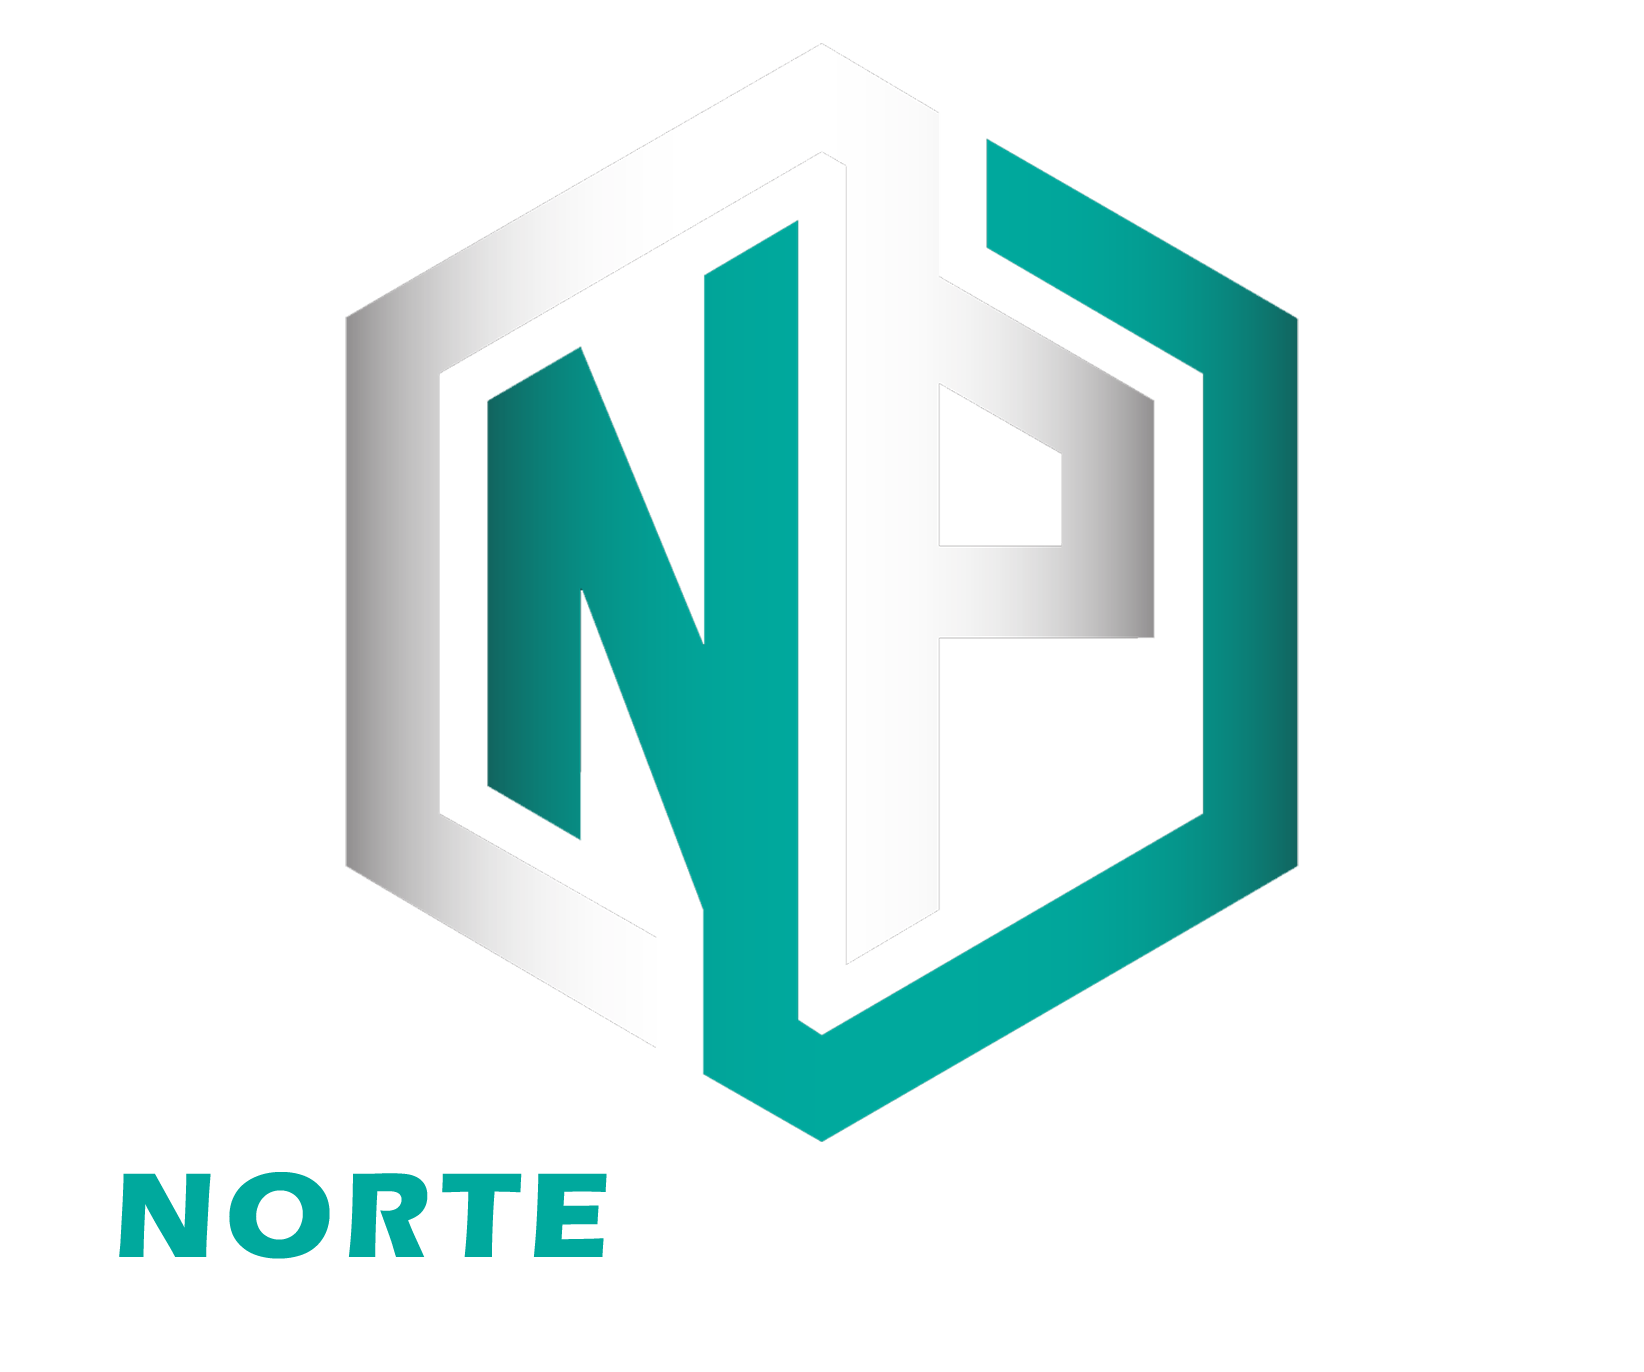 NortePackaging